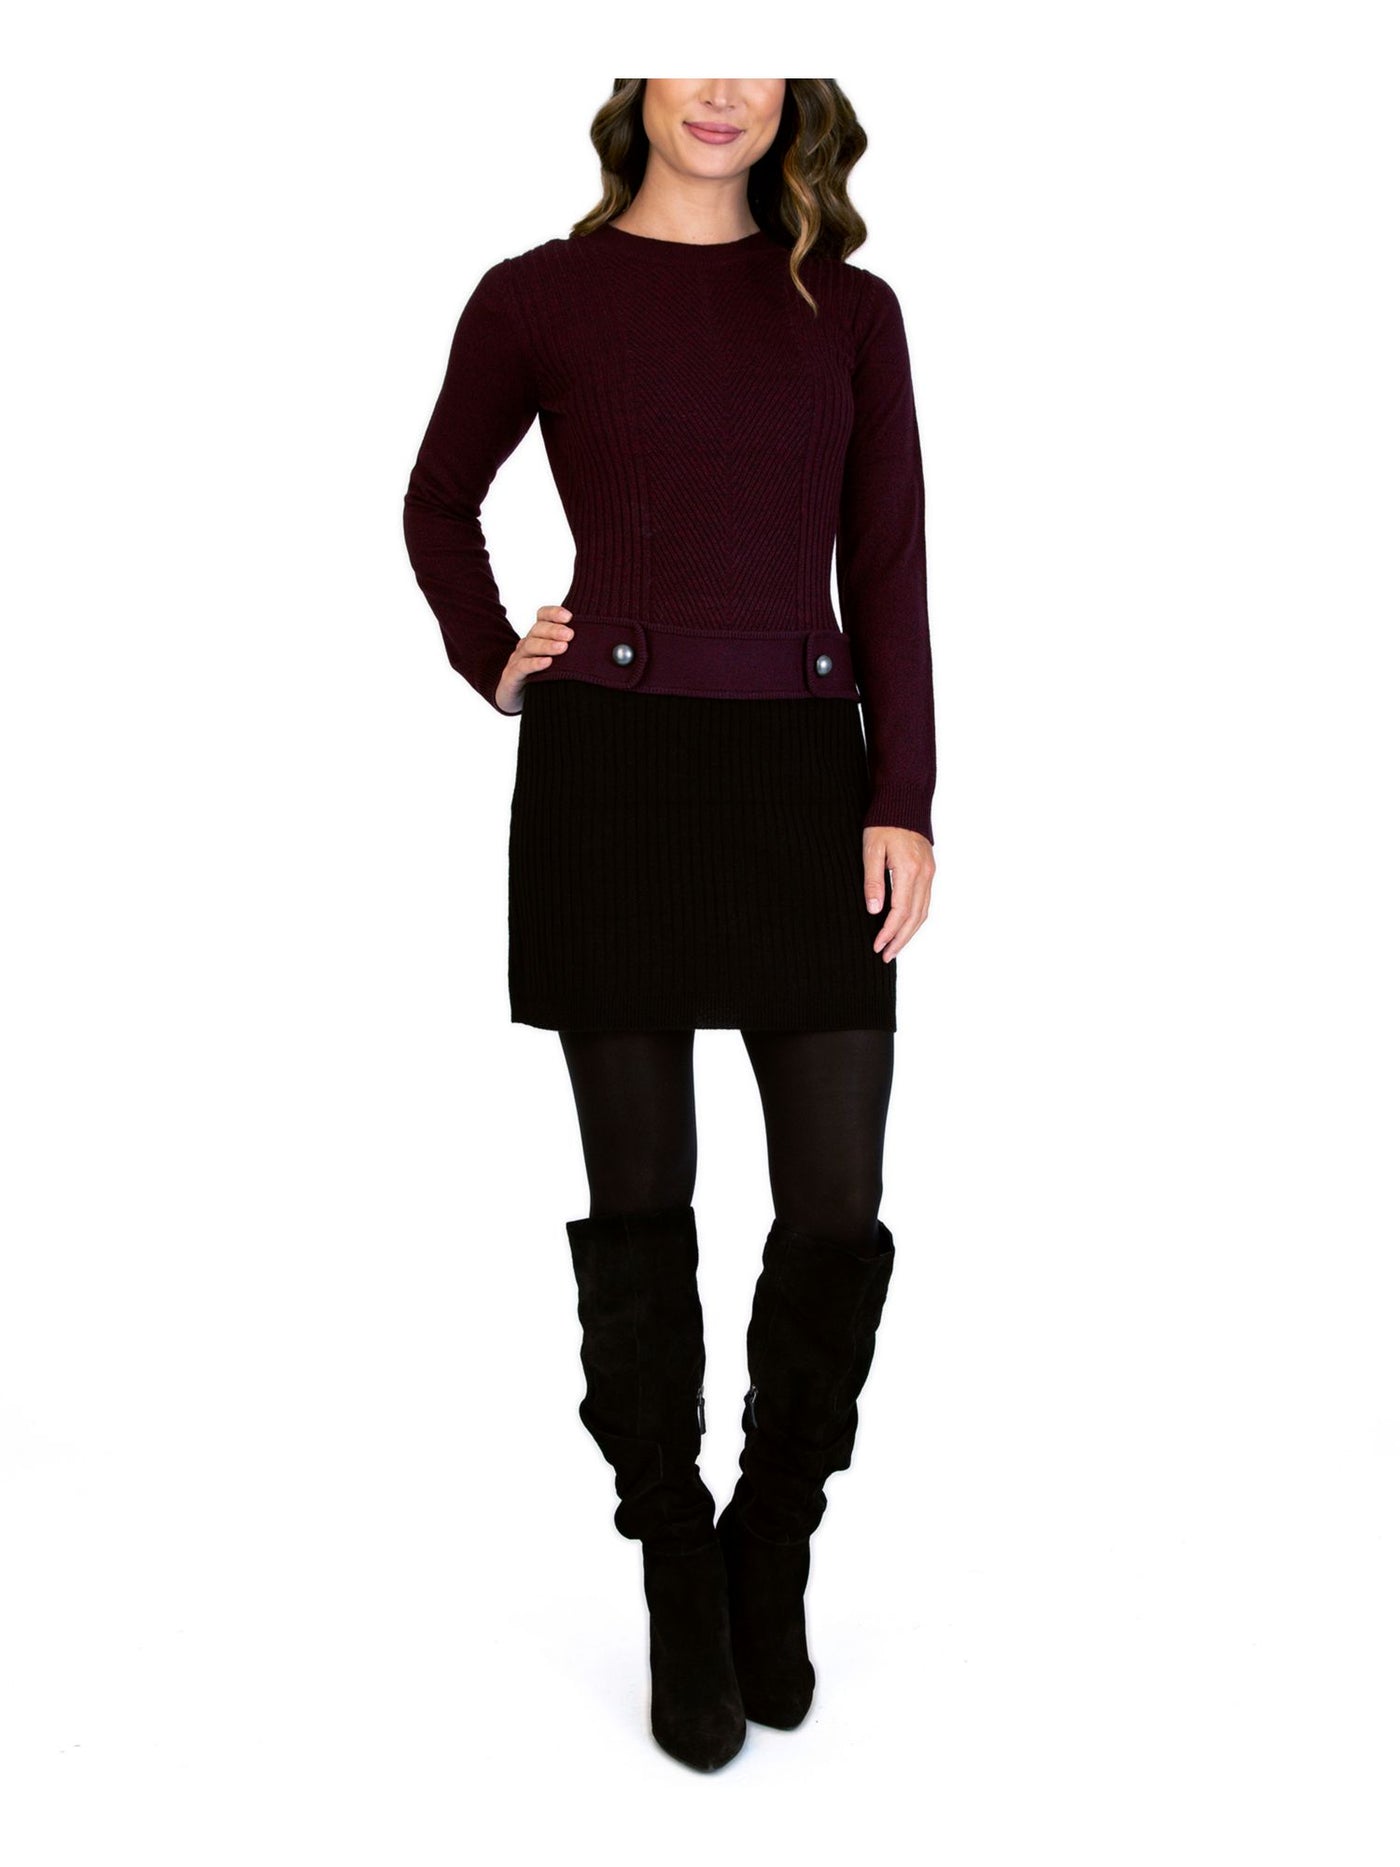 BCX DRESS Womens Burgundy Embellished Sweater Color Block Long Sleeve Crew Neck Short Sheath Dress Juniors L